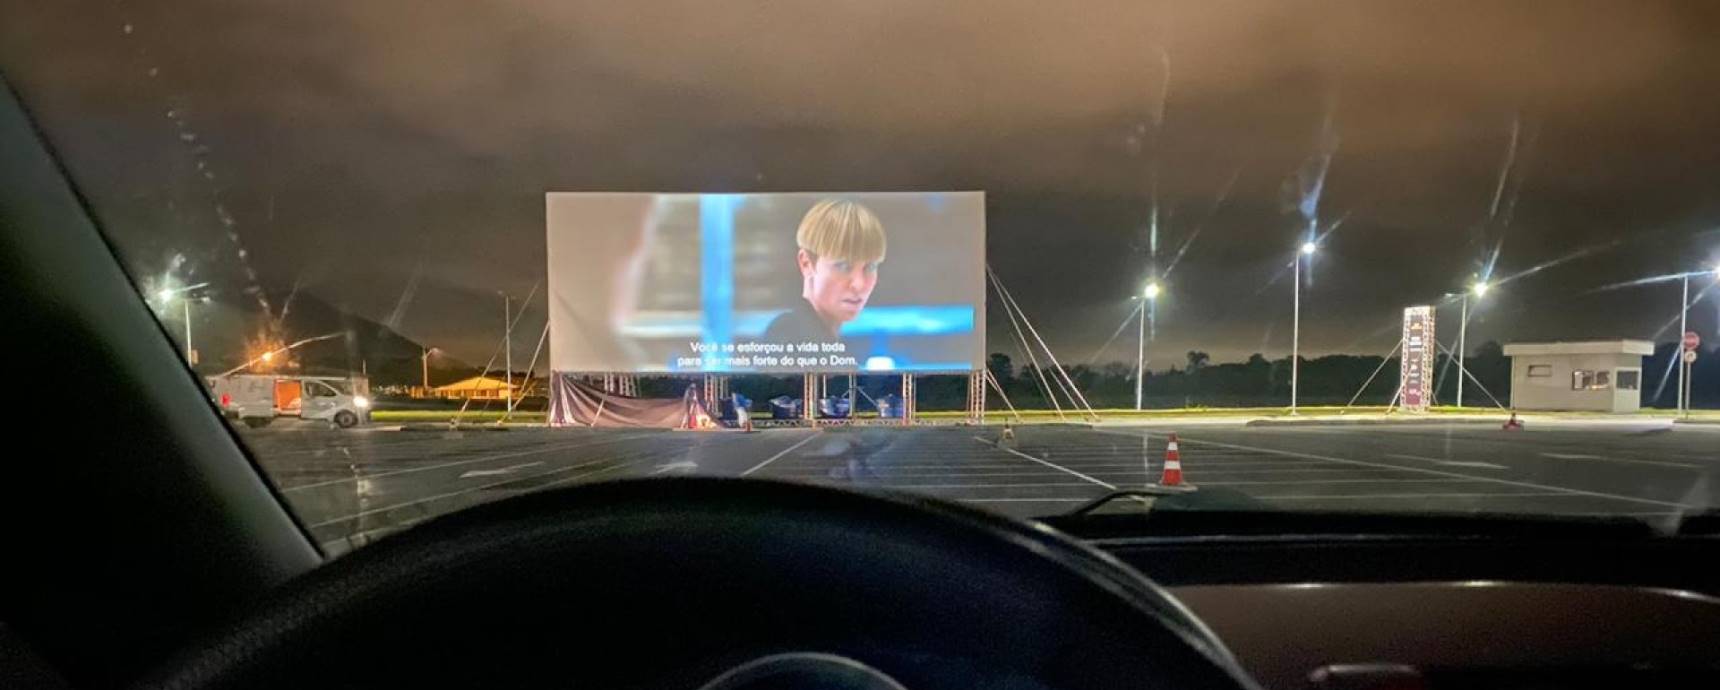 Cine Drive-in, do grupo Cinesystem, chega ao Aeroporto Internacional de Florianópolis